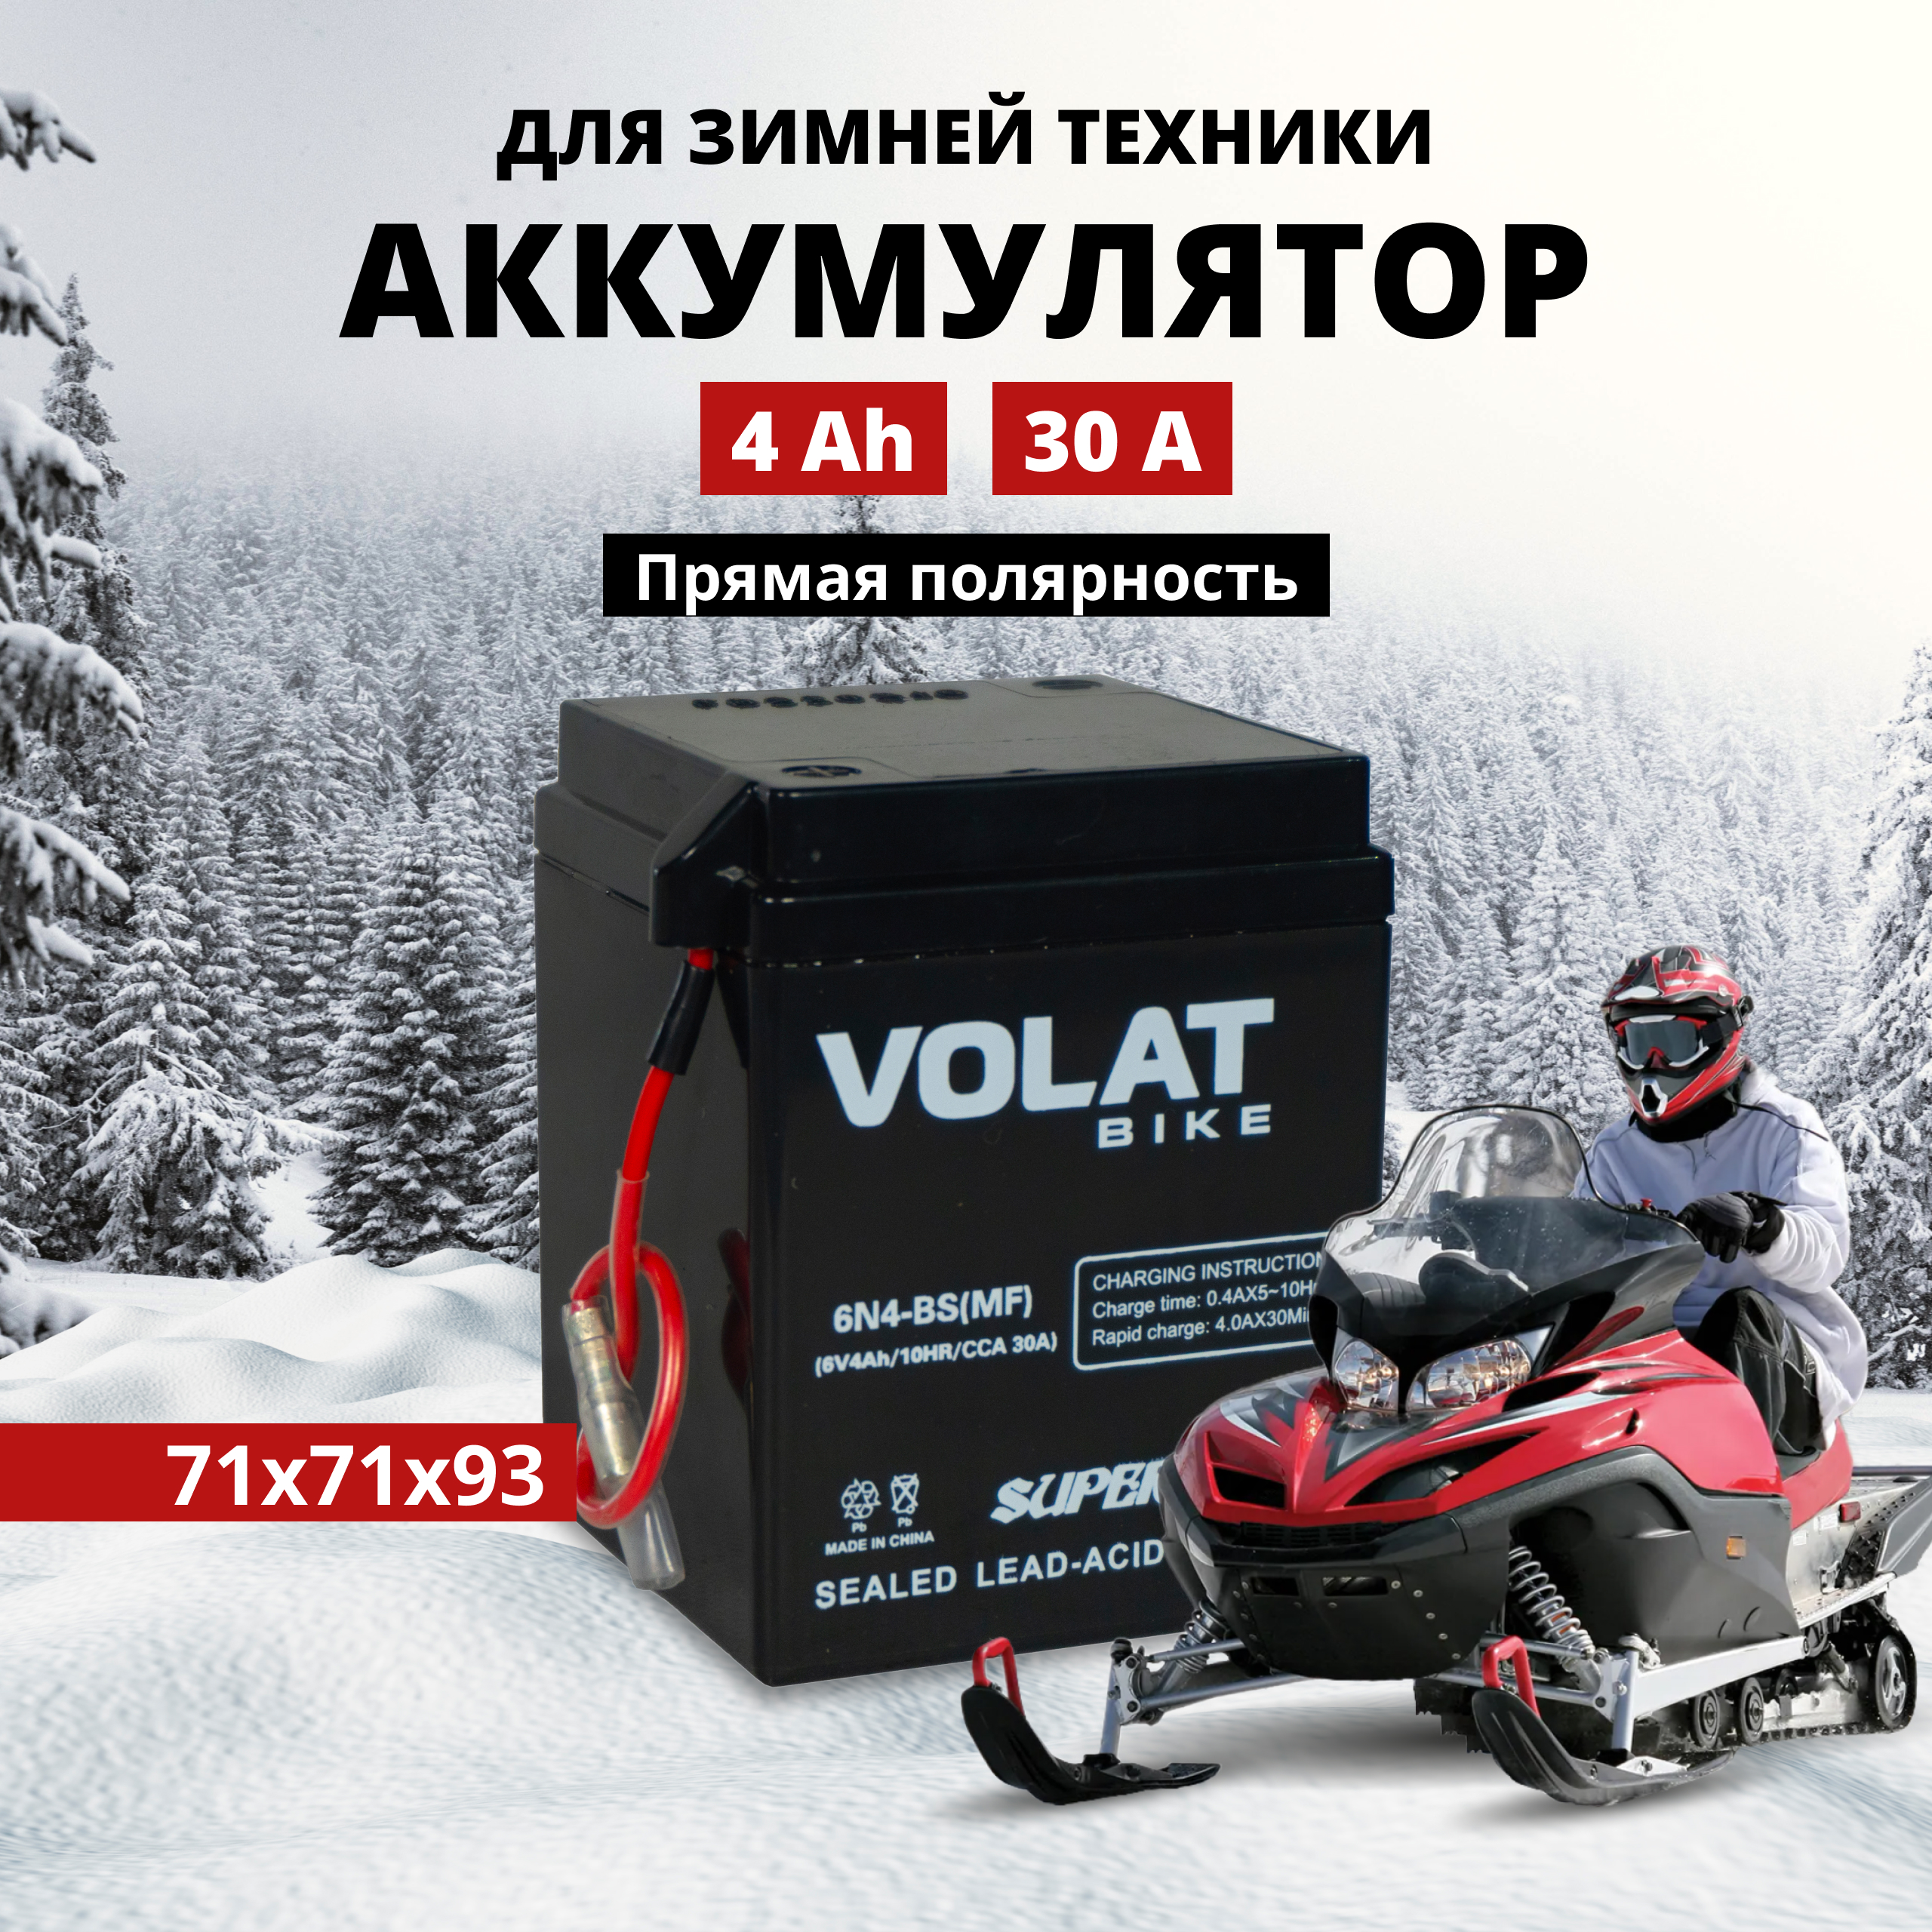 Аккумулятор для мотоцикла VOLAT 6 вольт 4 Ah 30 A прямая полярность 6N4-BS (MF)